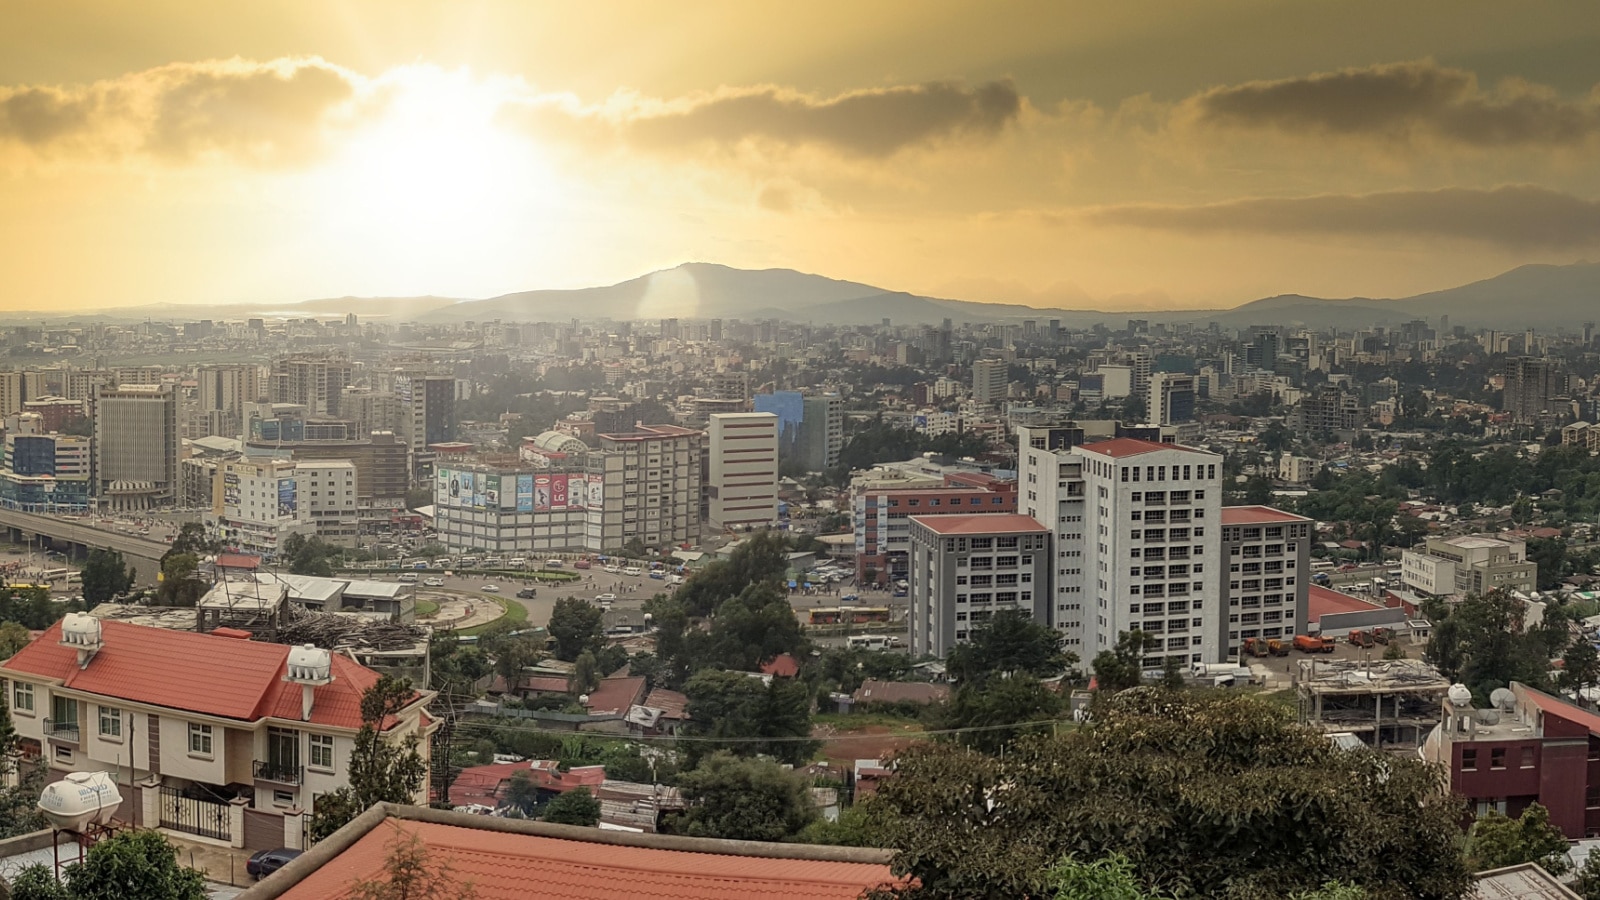 Addis Ababa, Ethiopia - October 2017: Panorama of the Capital City of Ethiopia, Addis Ababa